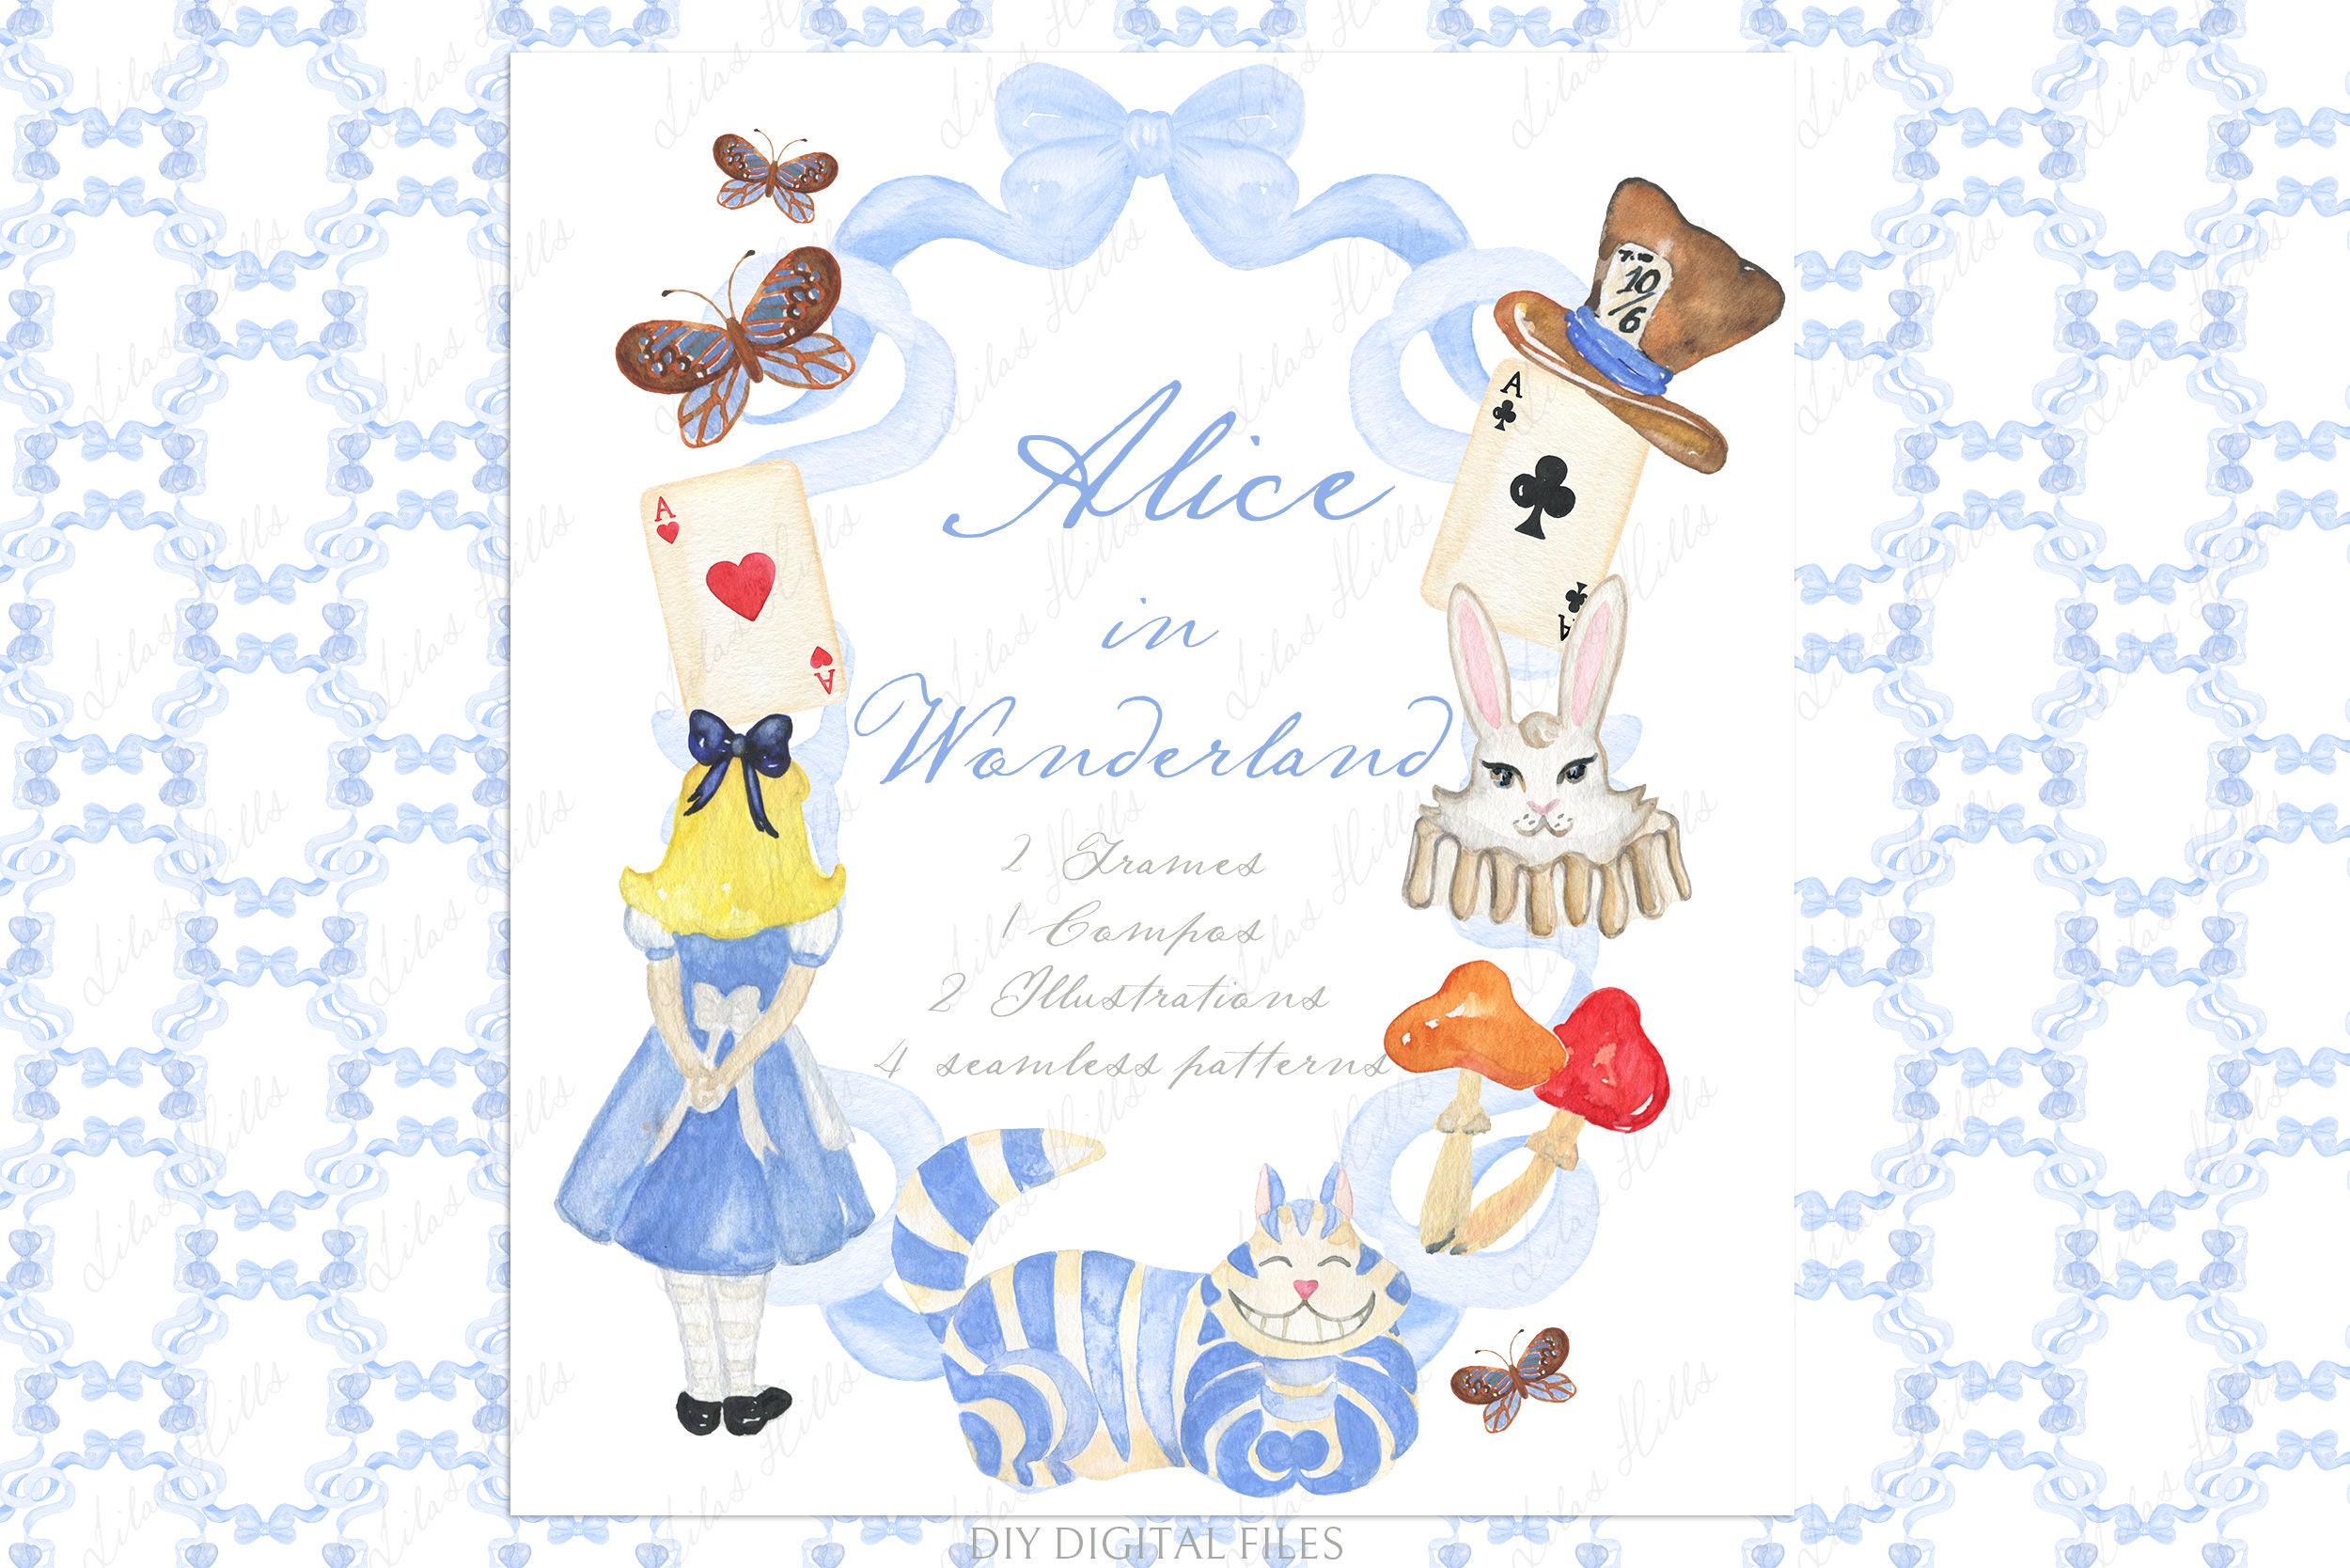 35 Alice in Wonderland Party Props, Printable DIY Ideas for Alice